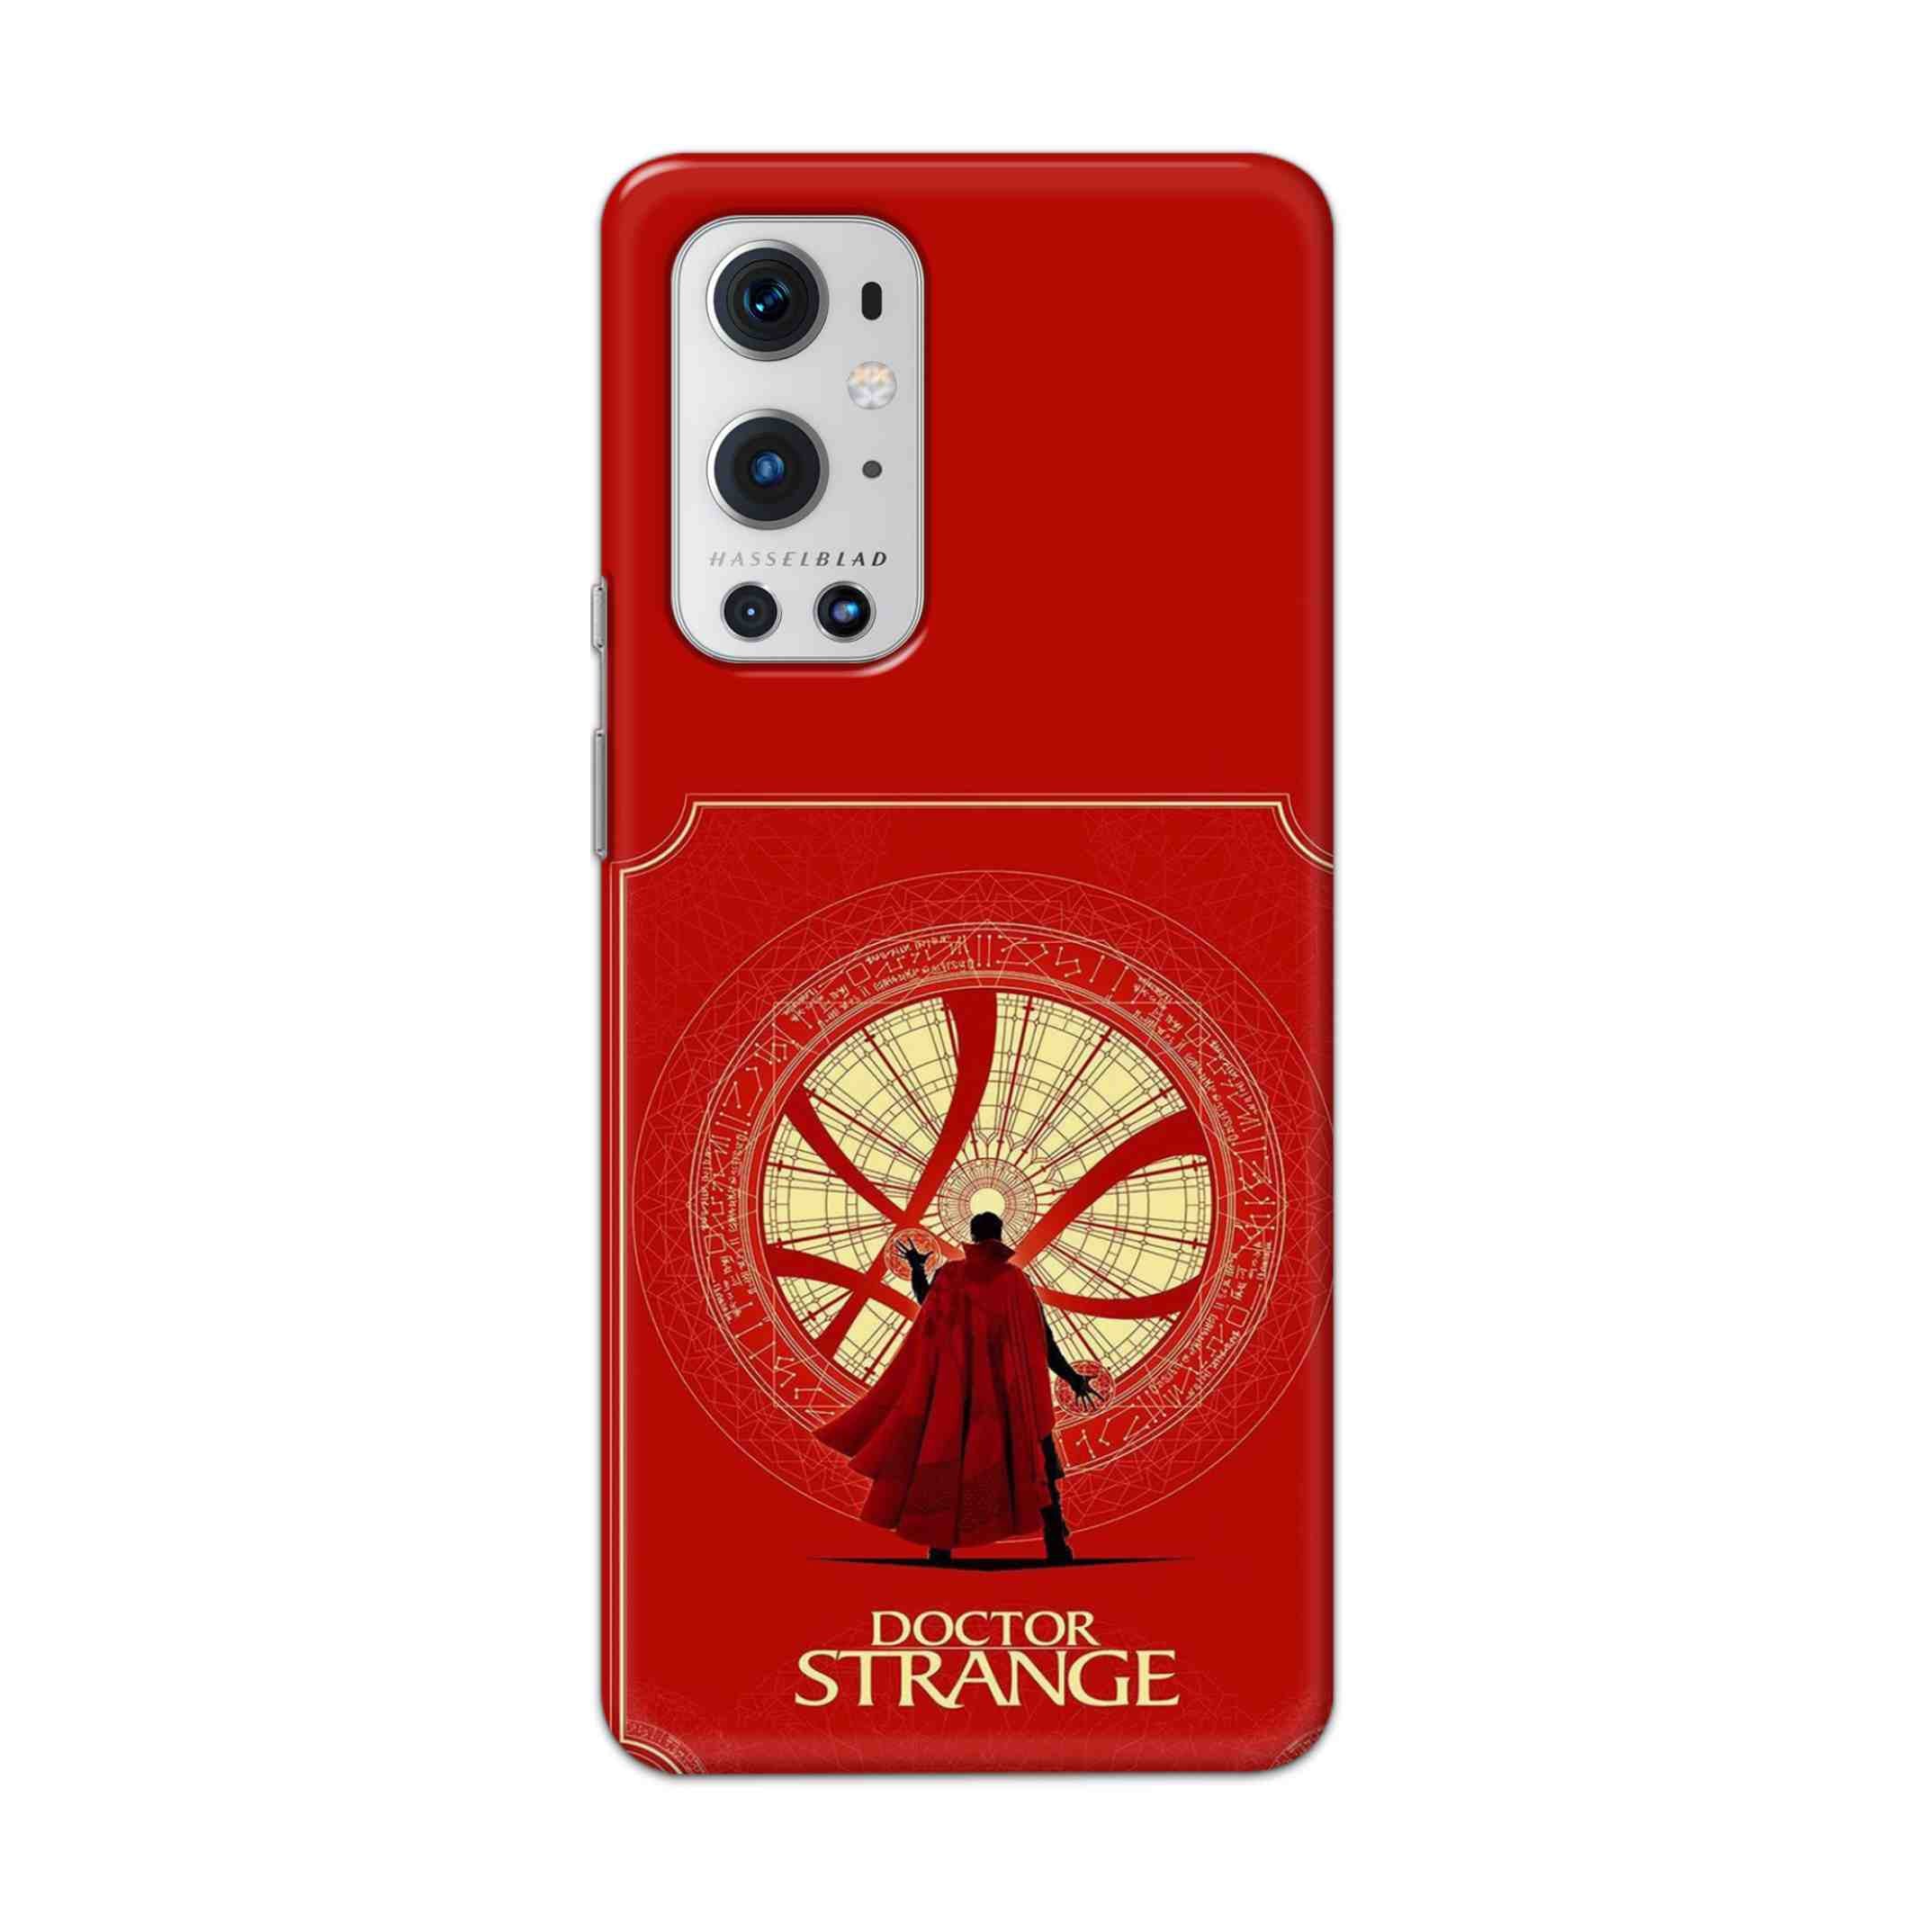 Buy Blood Doctor Strange Hard Back Mobile Phone Case Cover For OnePlus 9 Pro Online